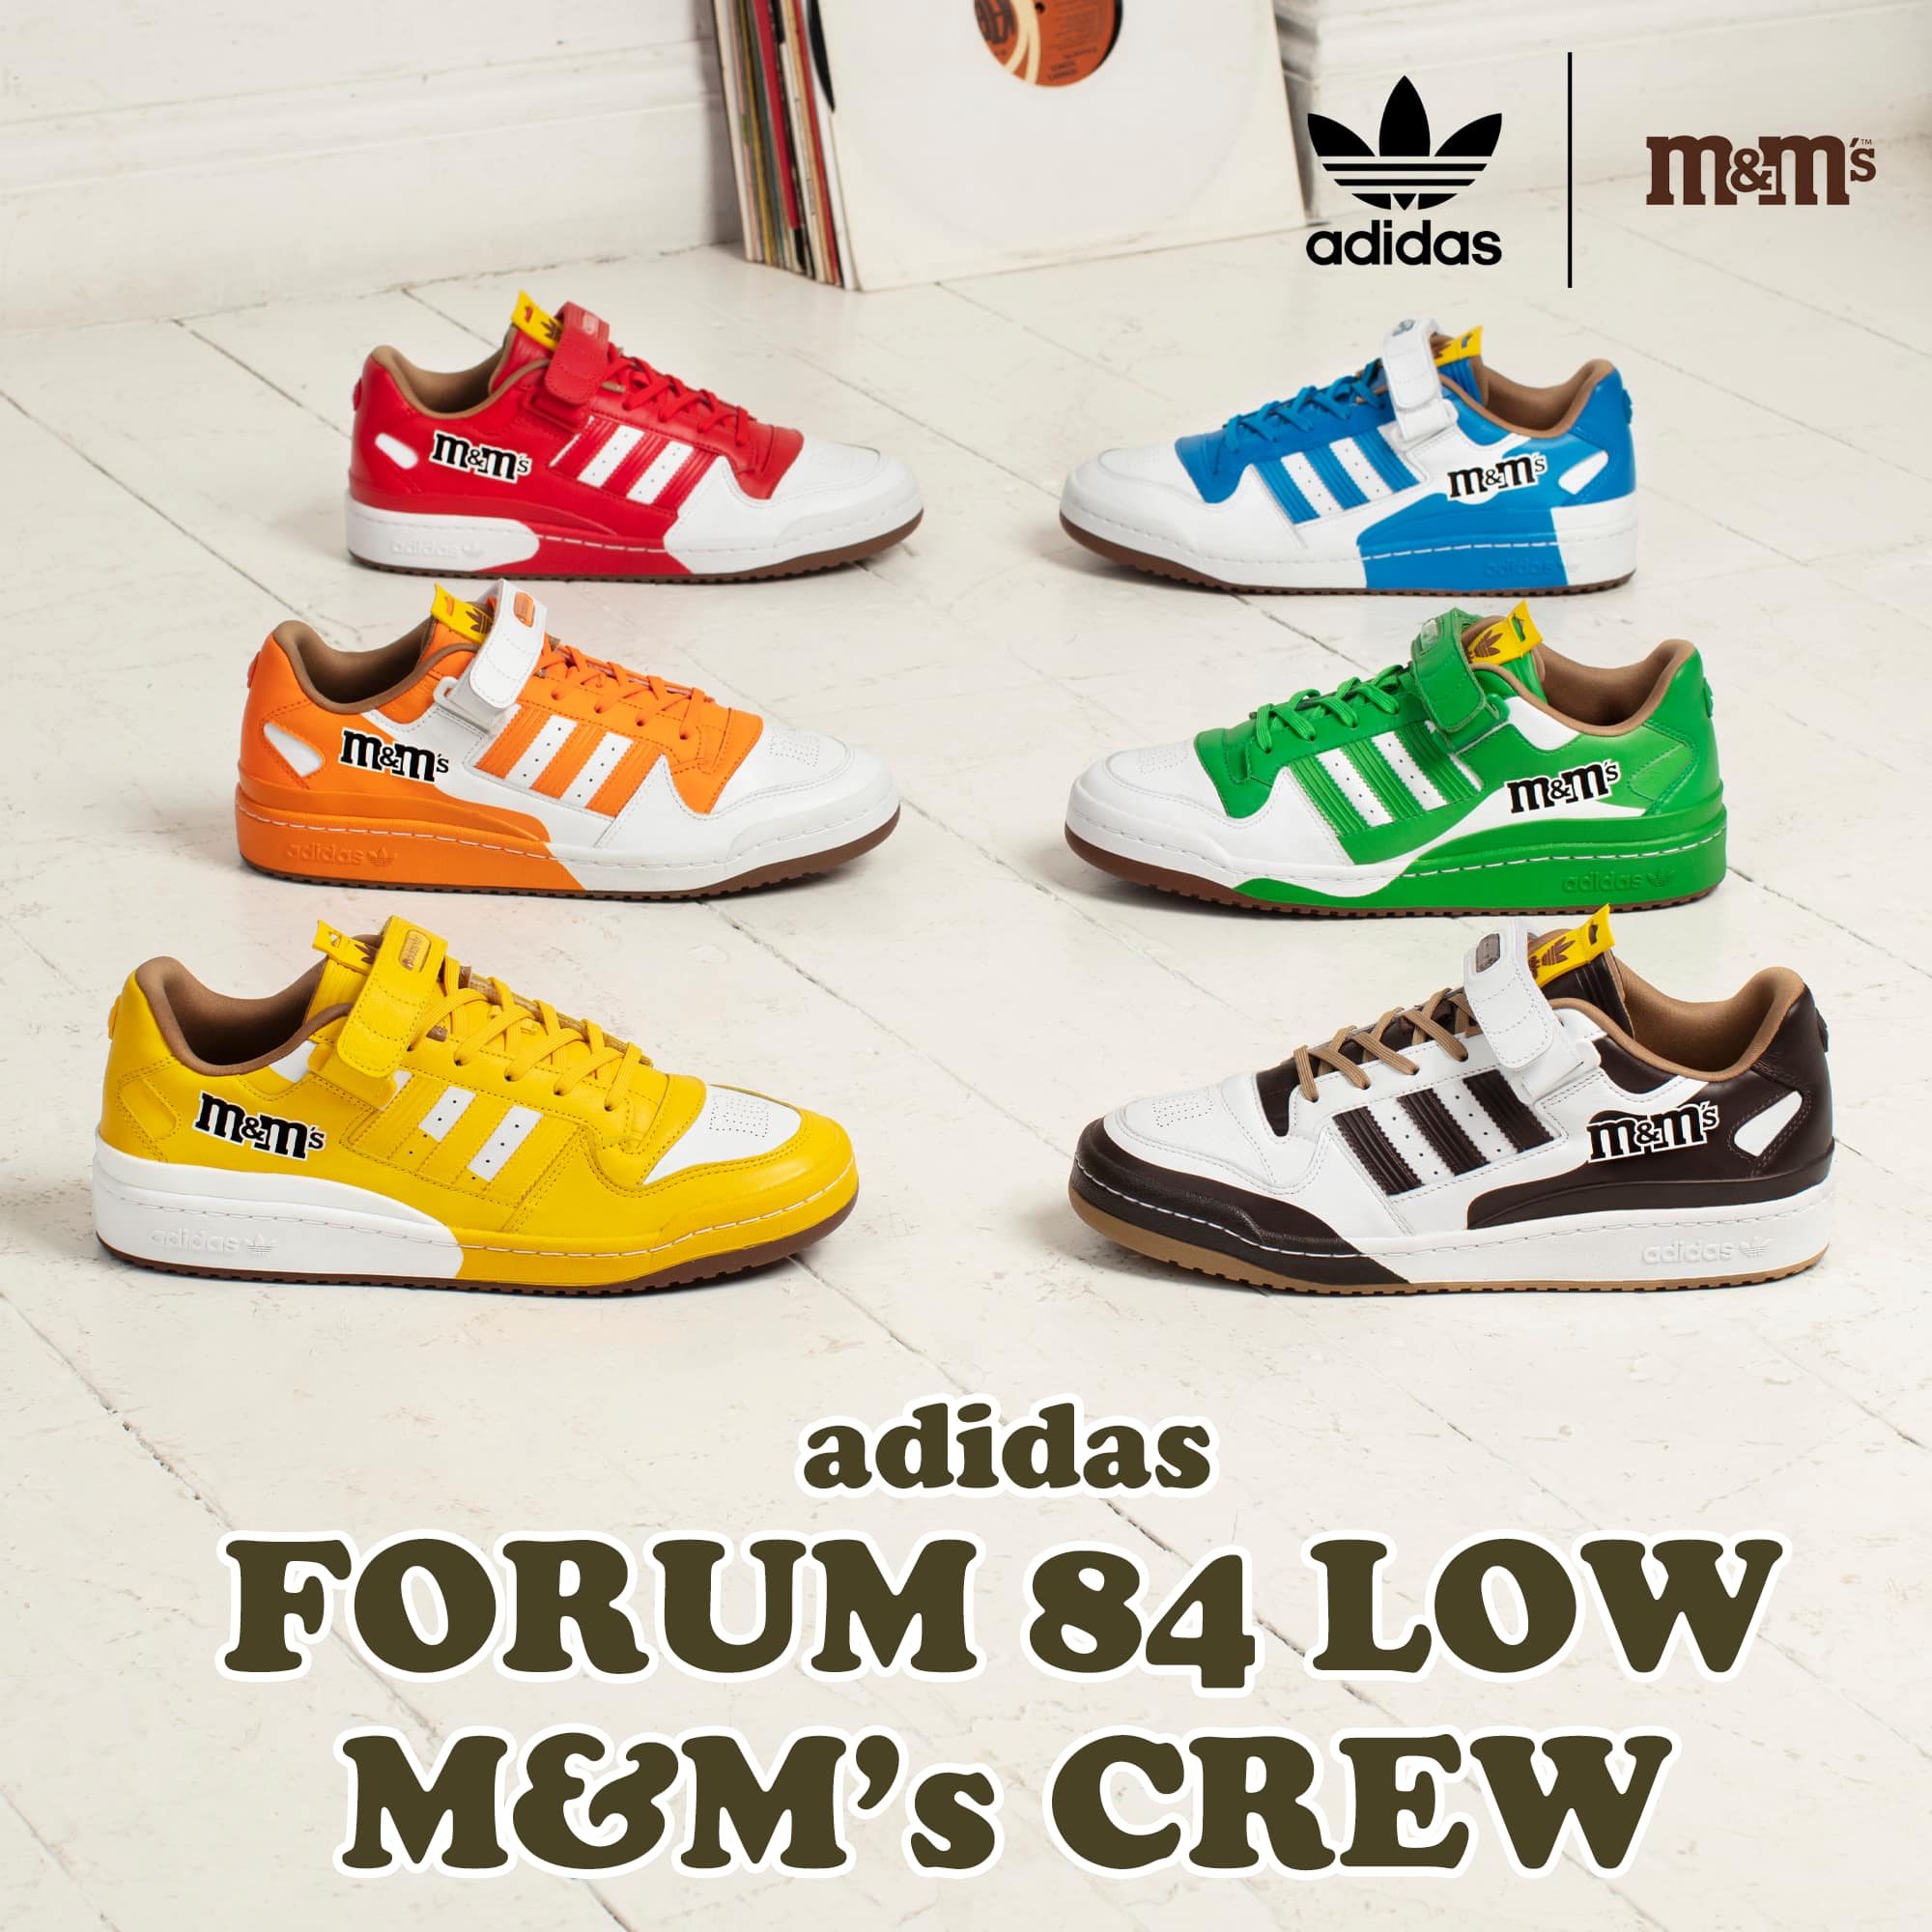 adidas Forum Lo 84 M&Ms Crew